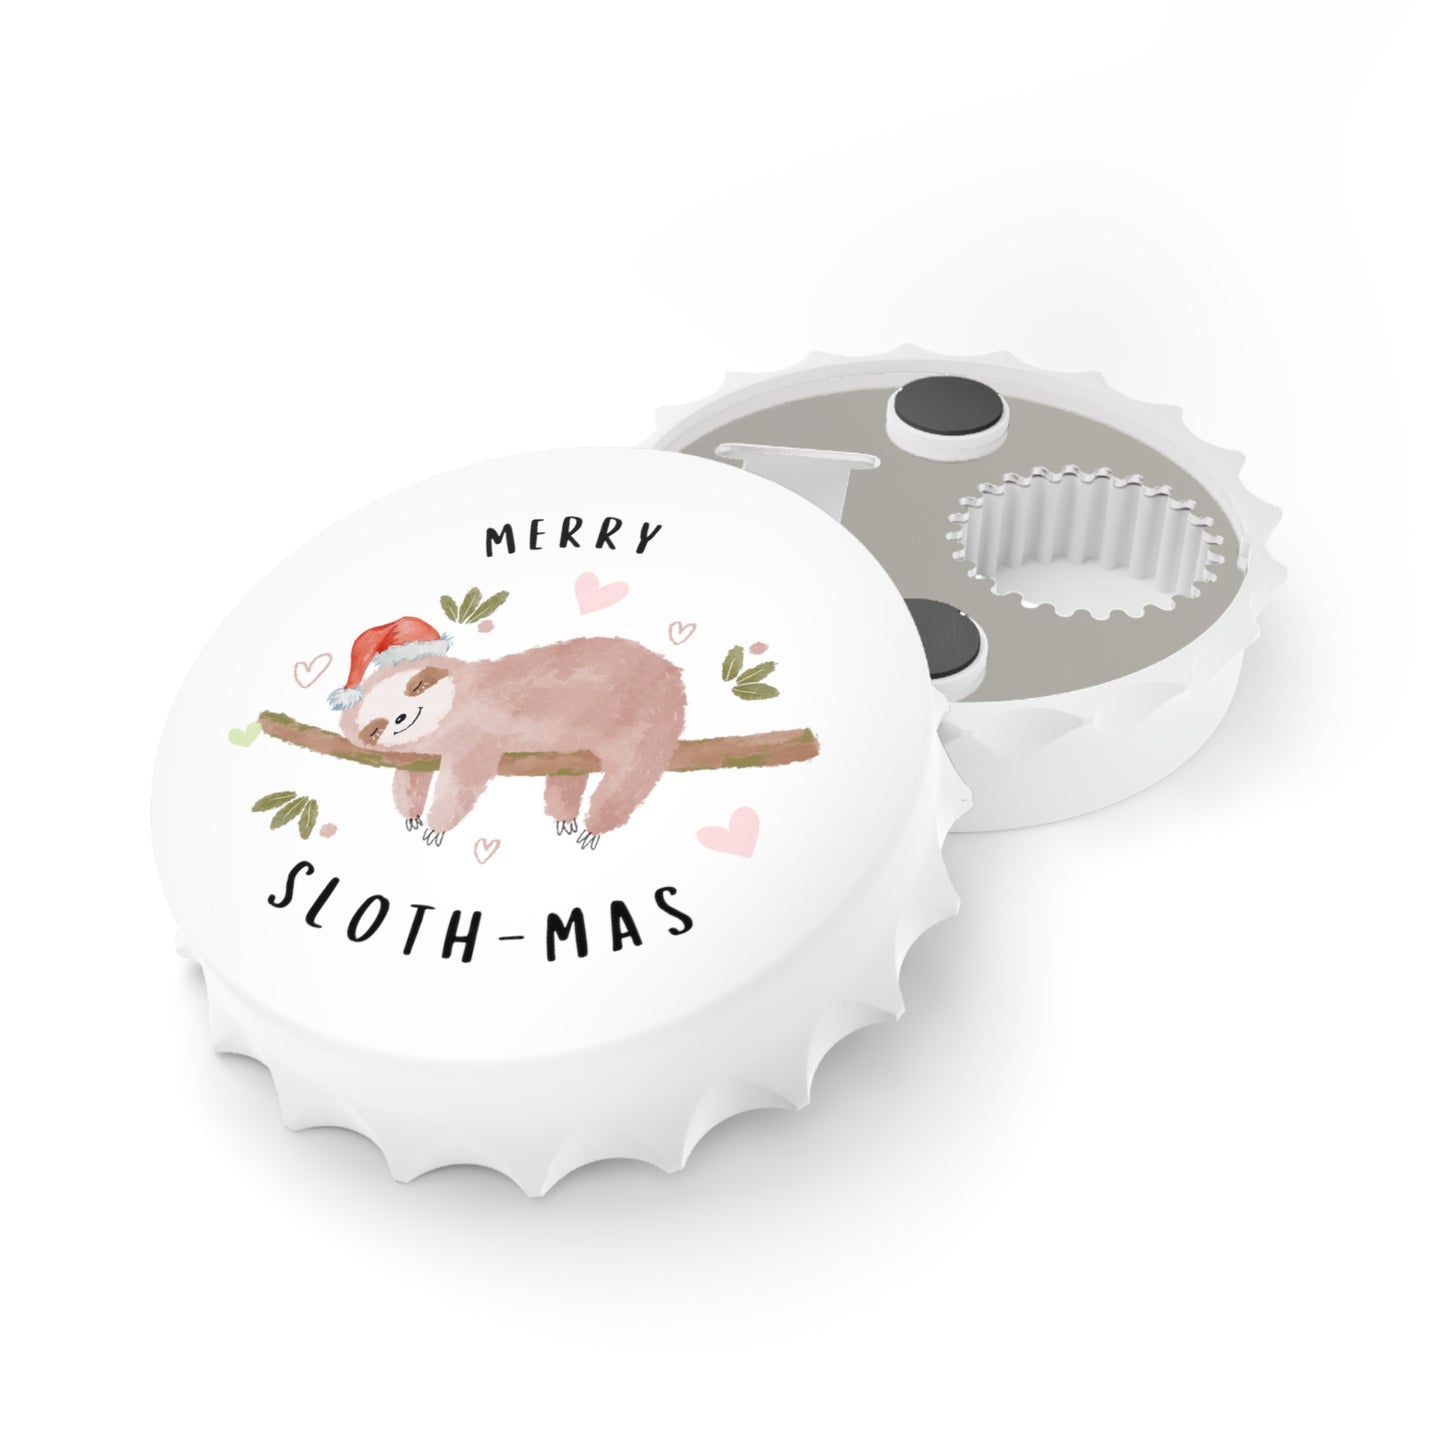 Magnetic Bottle Opener - Merry Sloth-mas